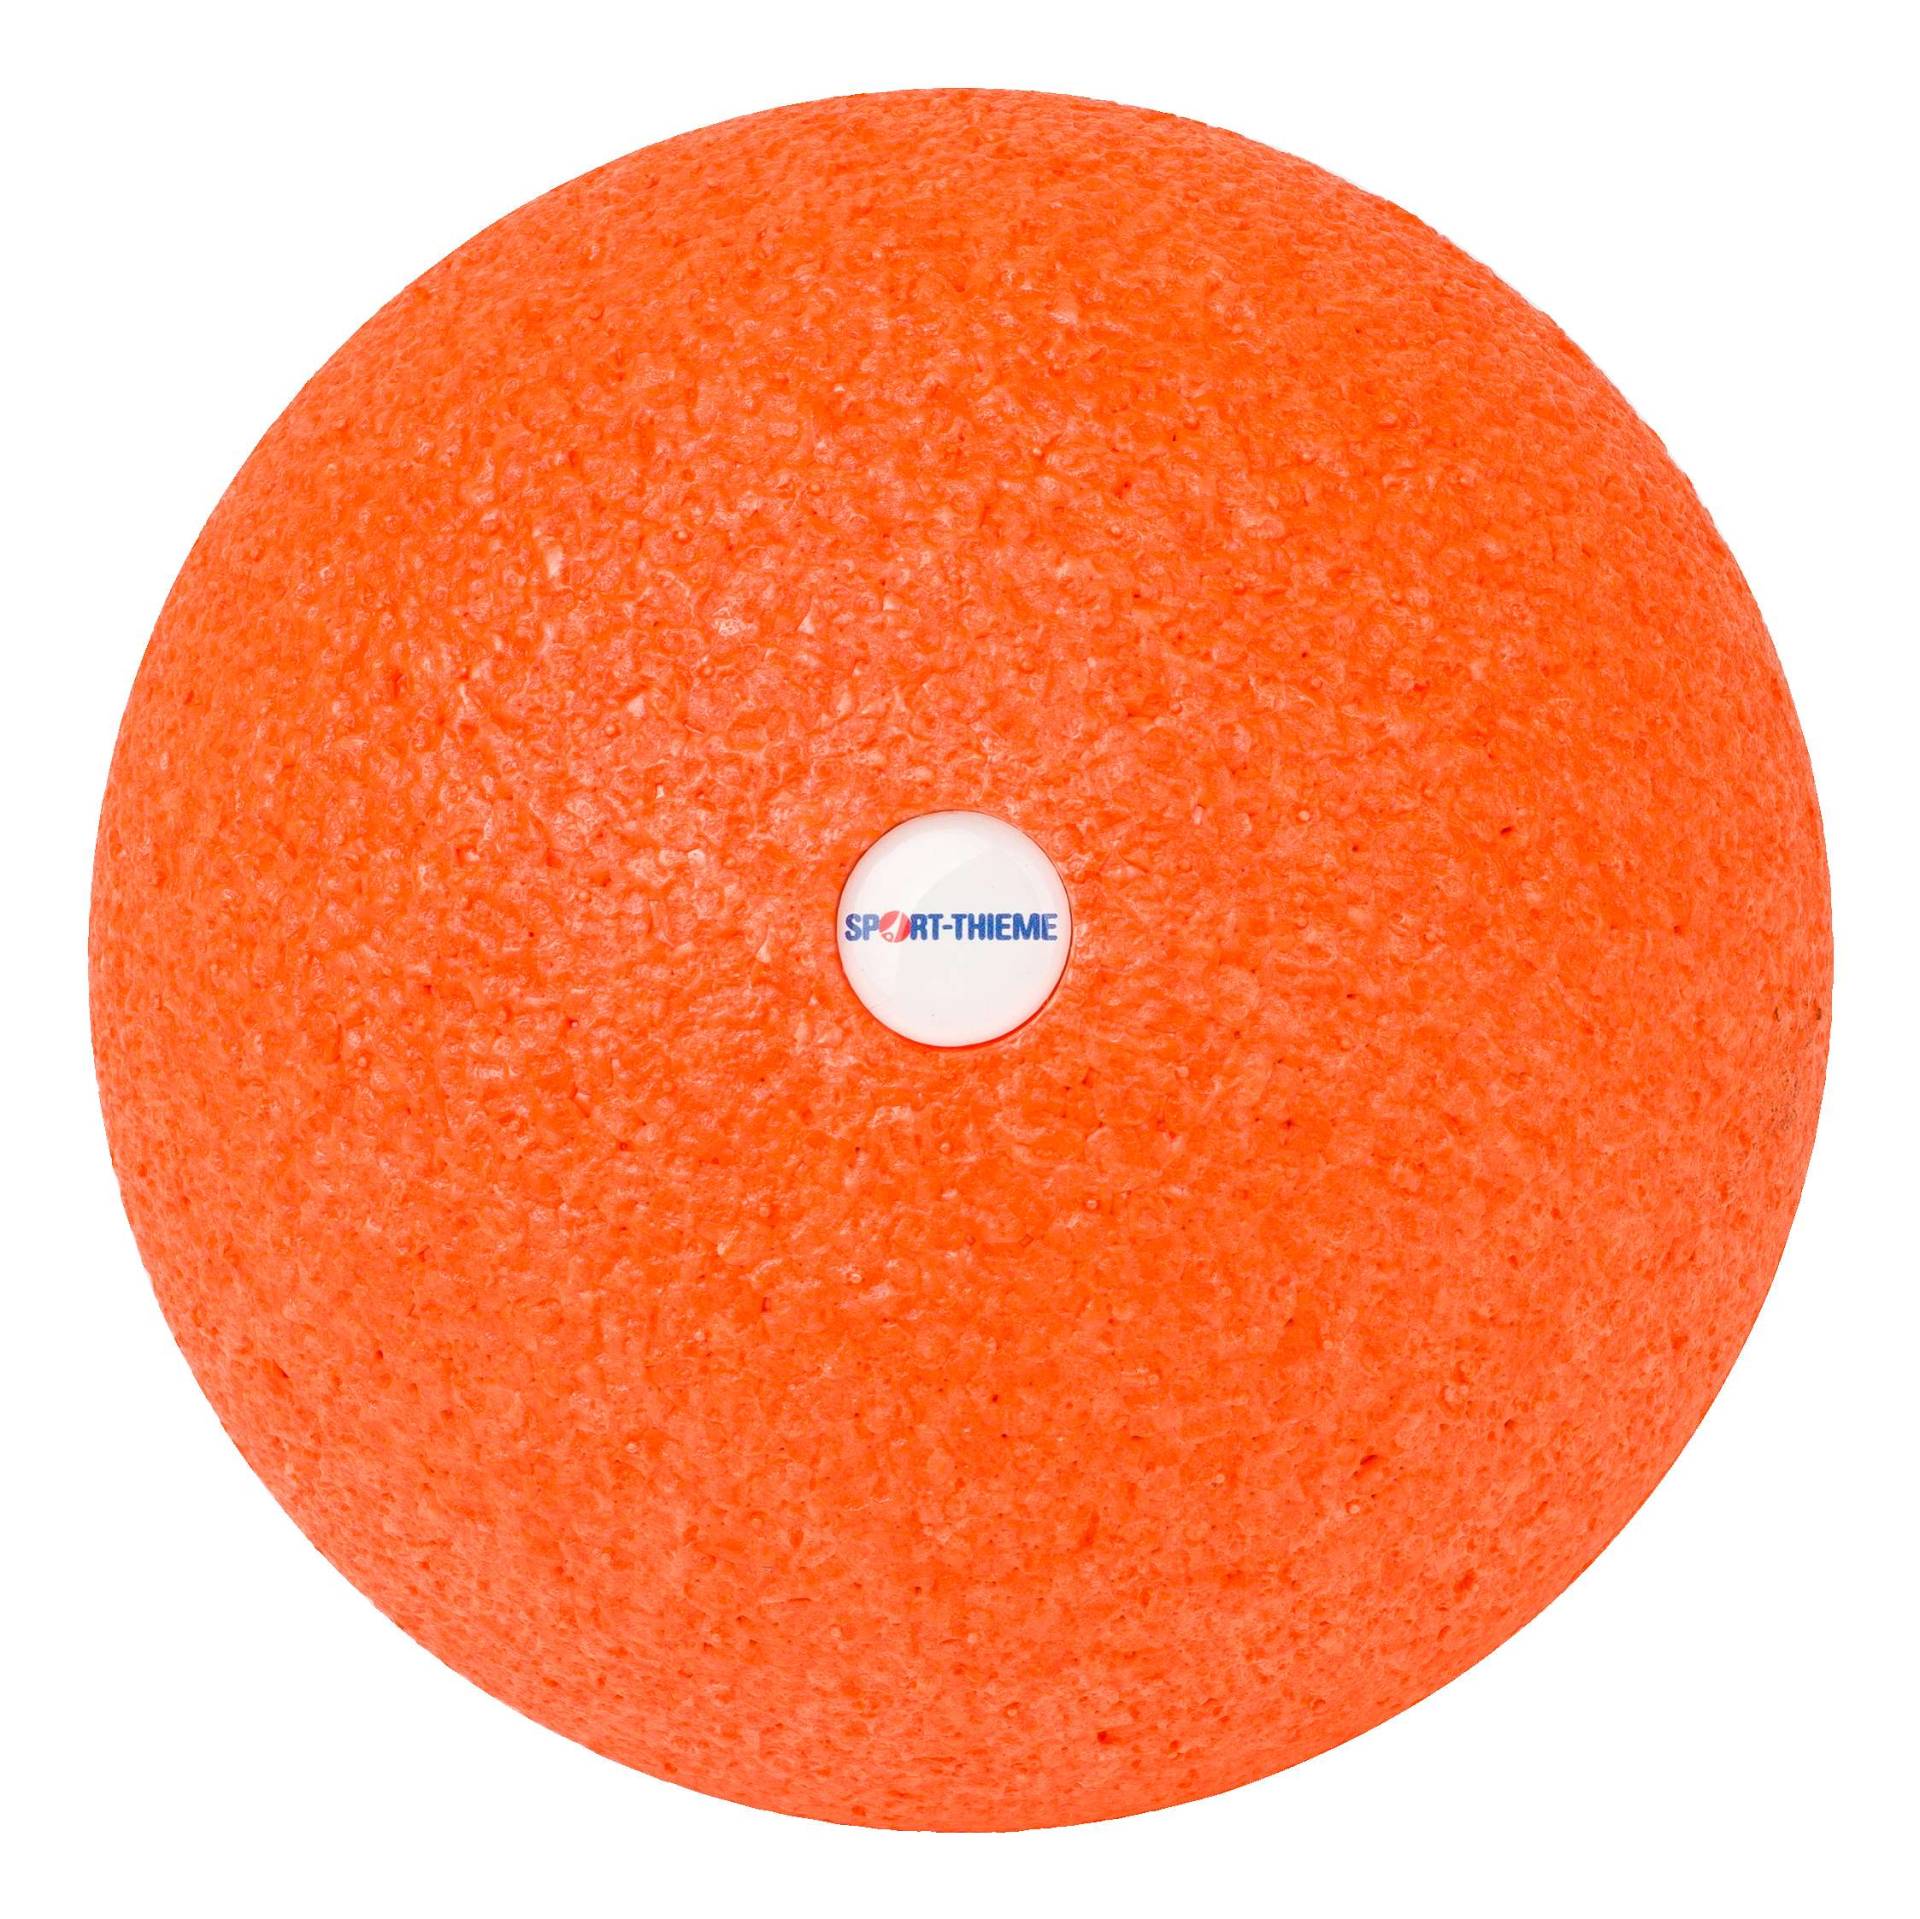 Blackroll Faszienball, Orange, ø 12 cm von Blackroll